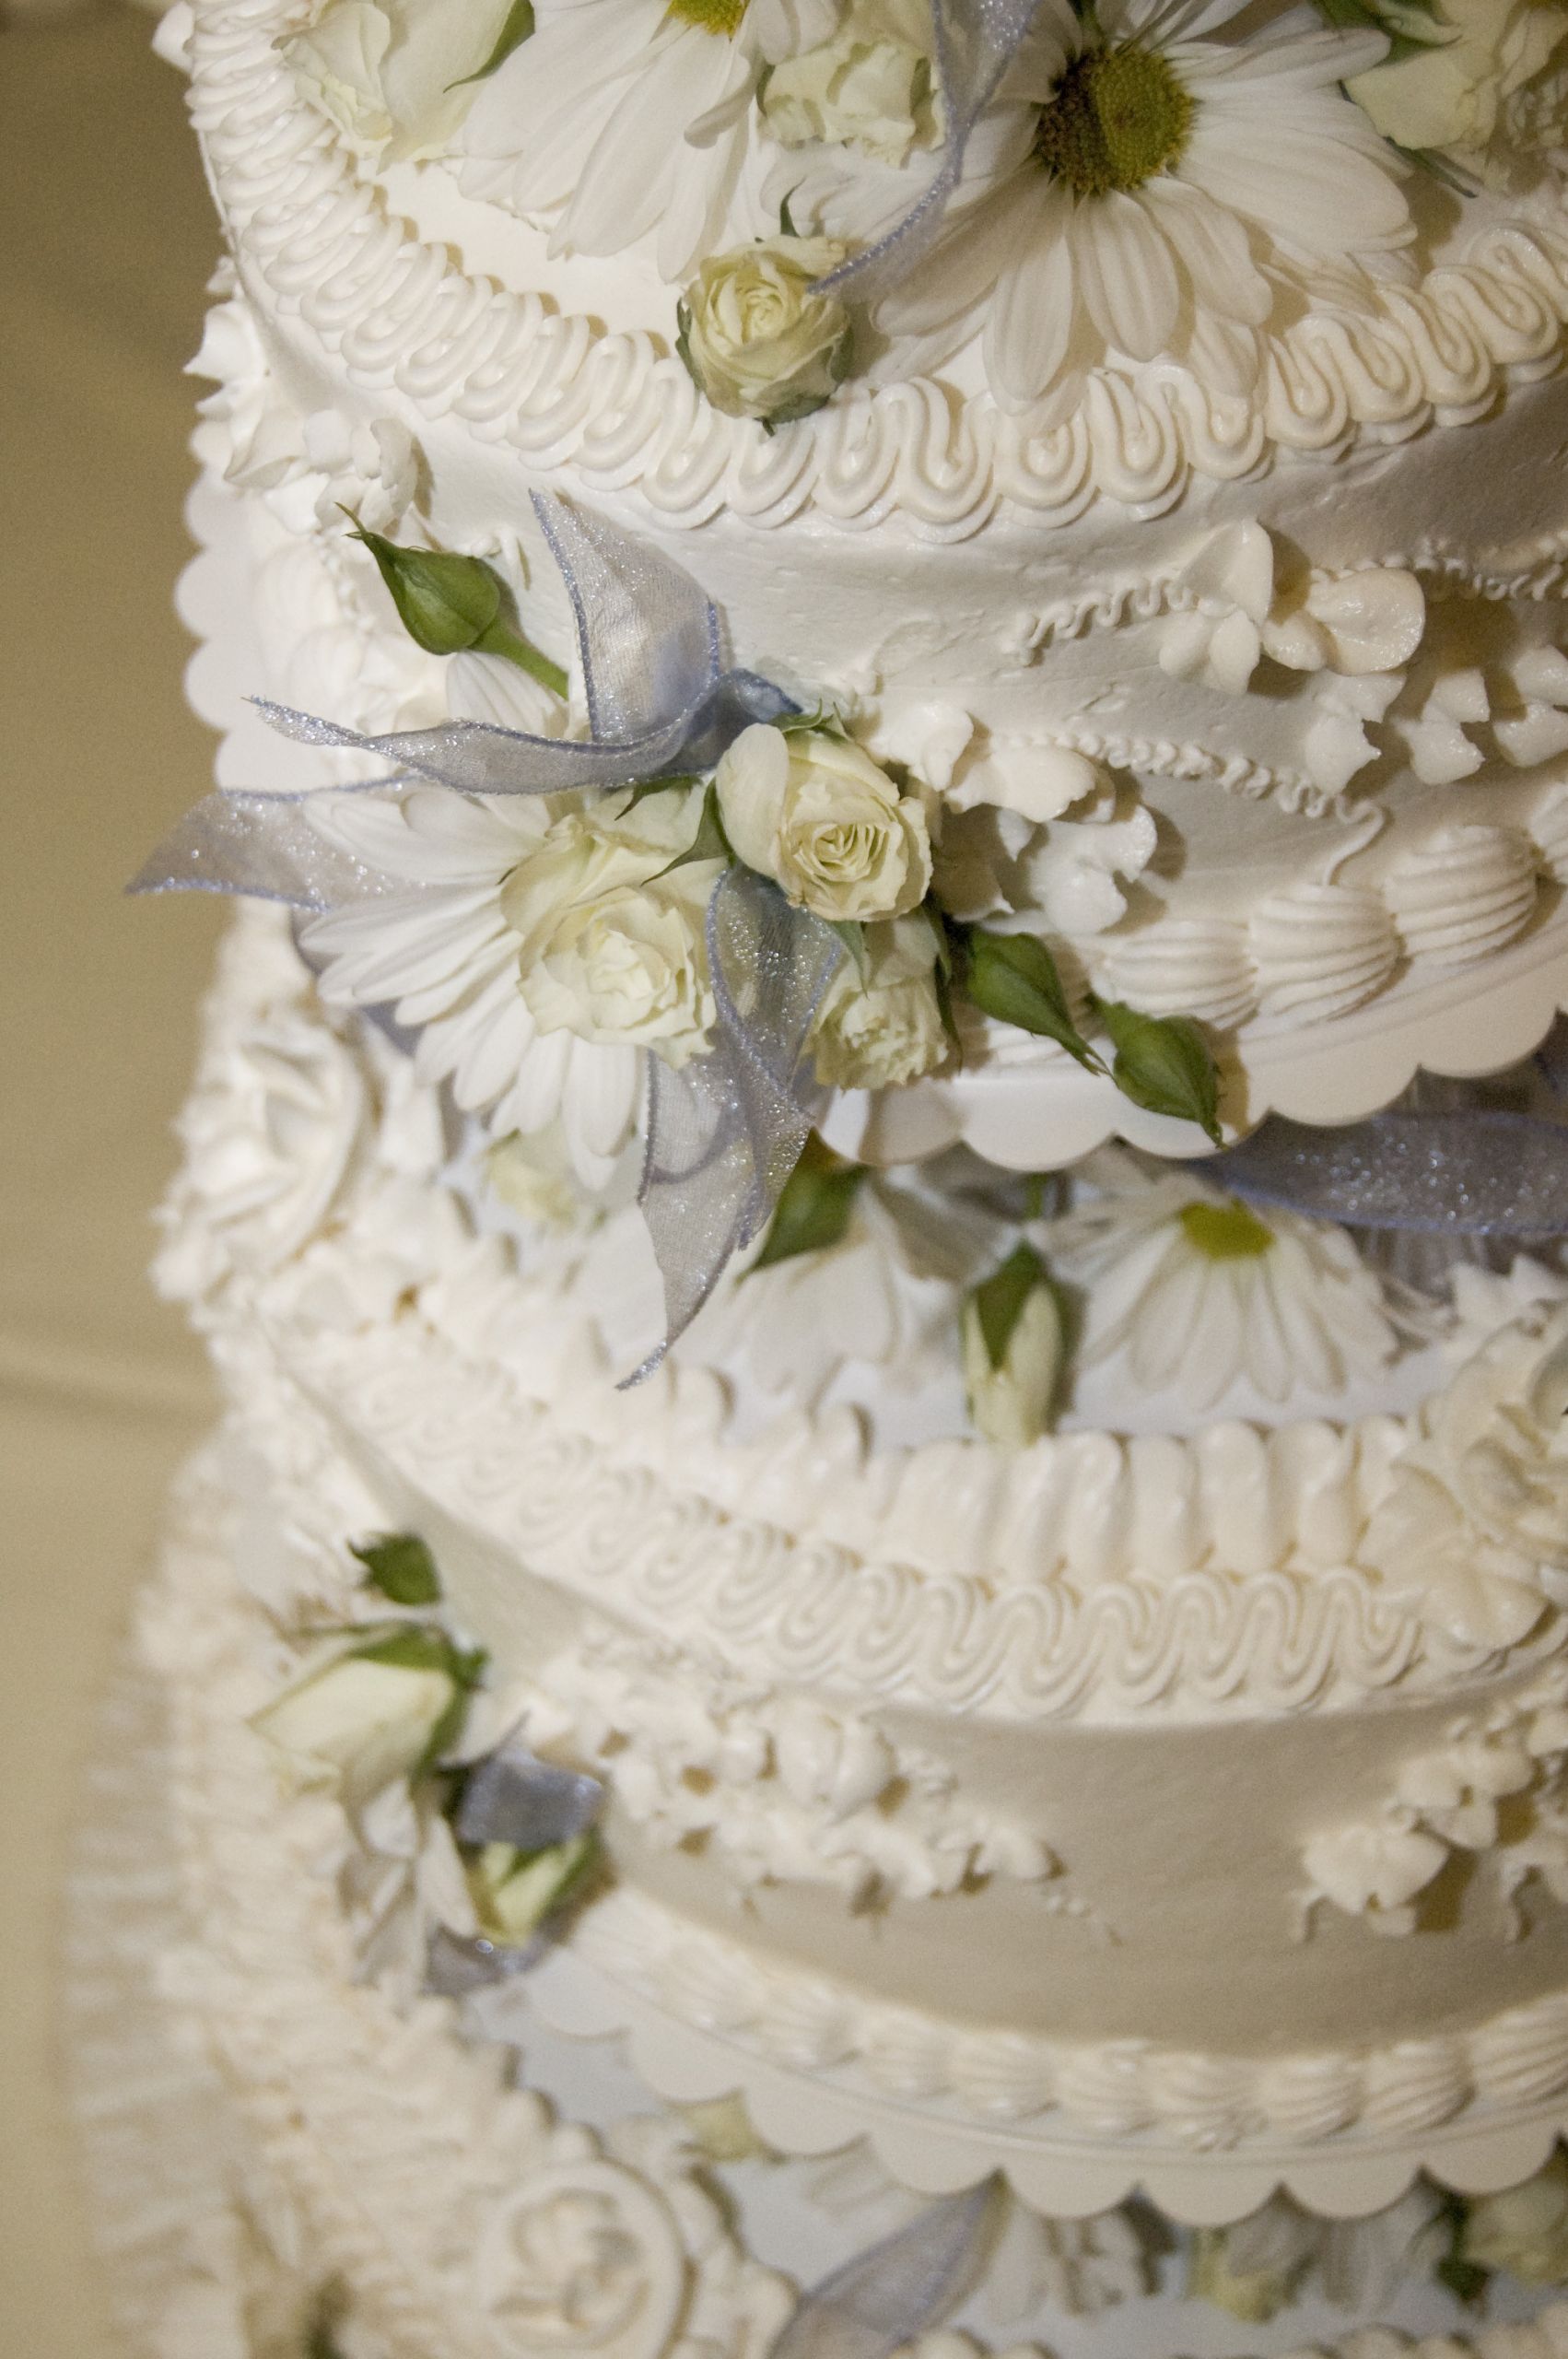 Decorating A Wedding Cake
 Instructions Decorating A Wedding Cake – Wedding Cake